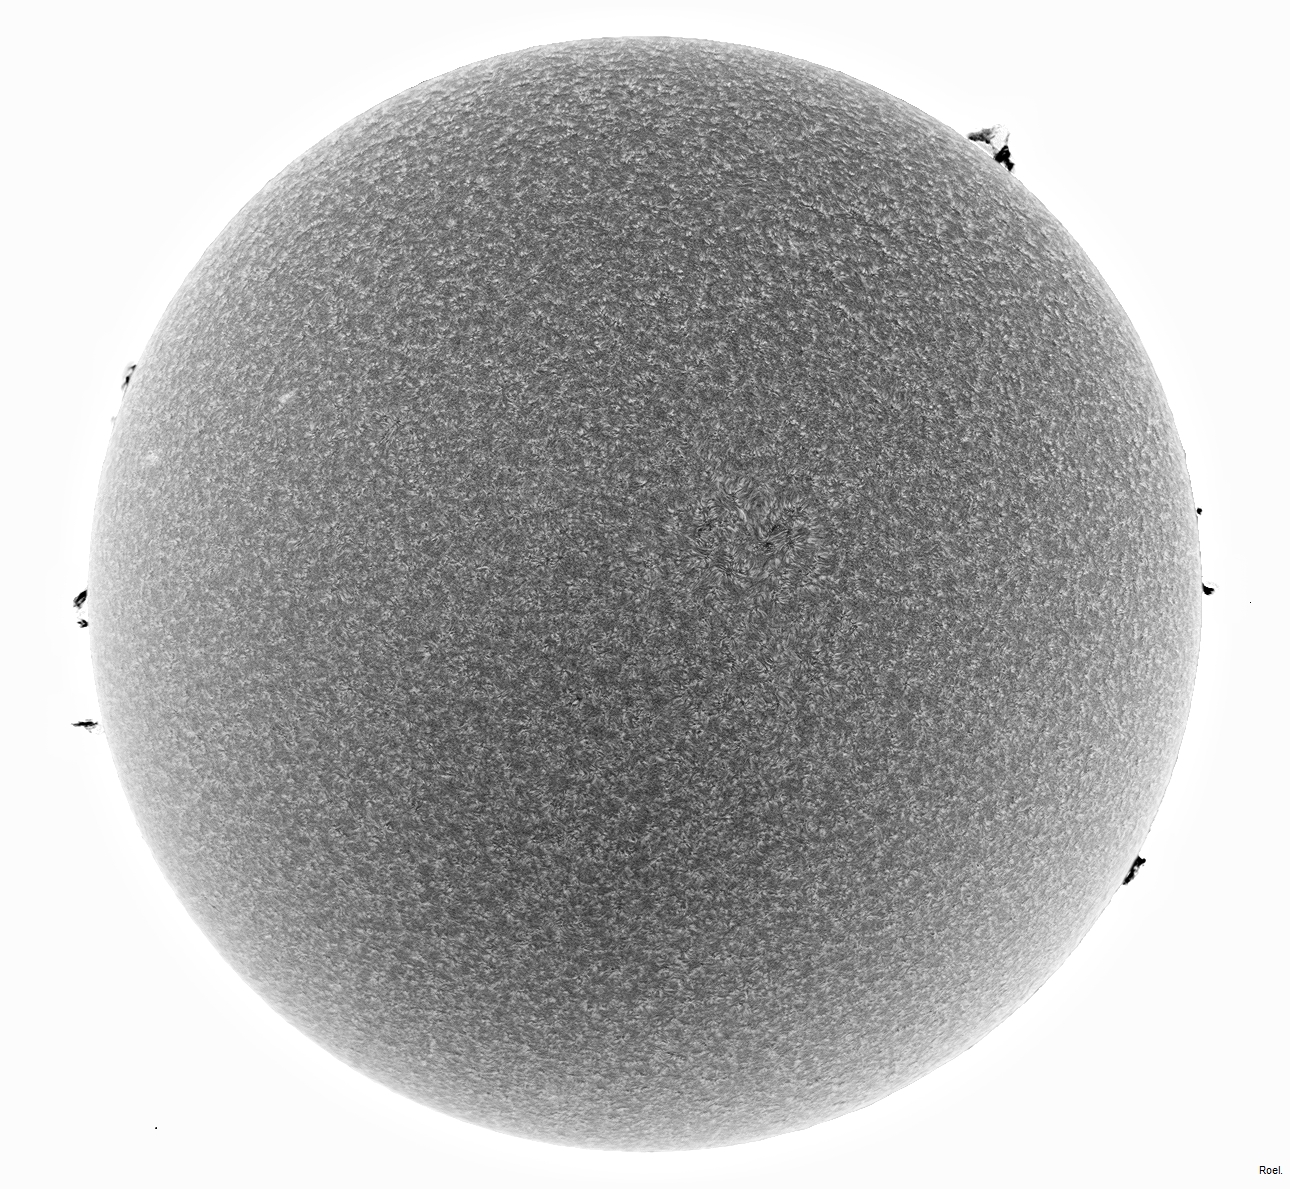 Sol del 19 de septiembre del 2018-Solarmax 90-DS-BF30-1neg.jpg